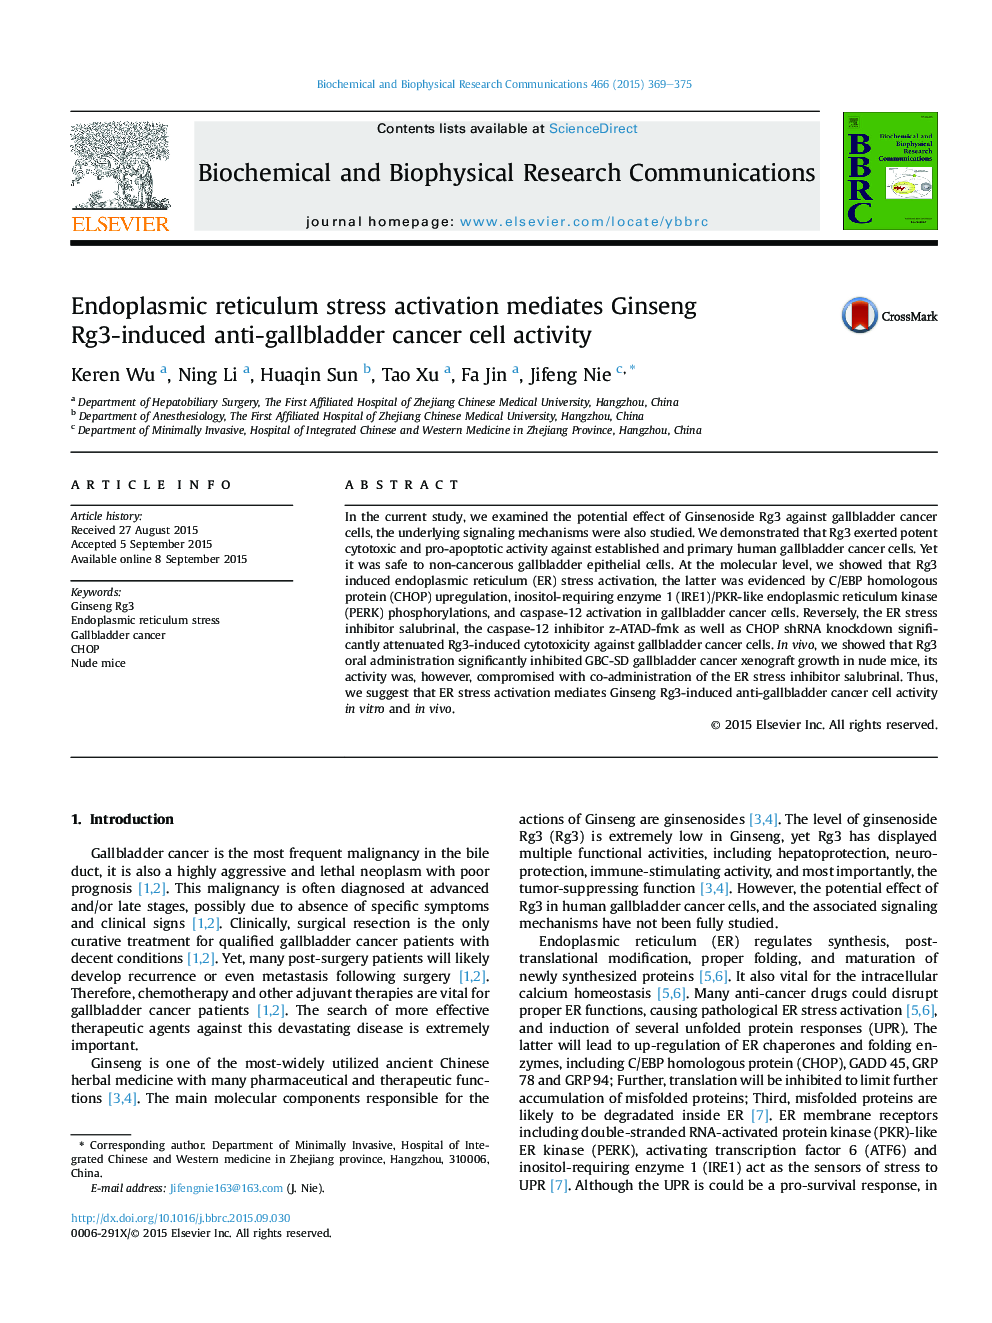 Endoplasmic reticulum stress activation mediates Ginseng Rg3-induced anti-gallbladder cancer cell activity